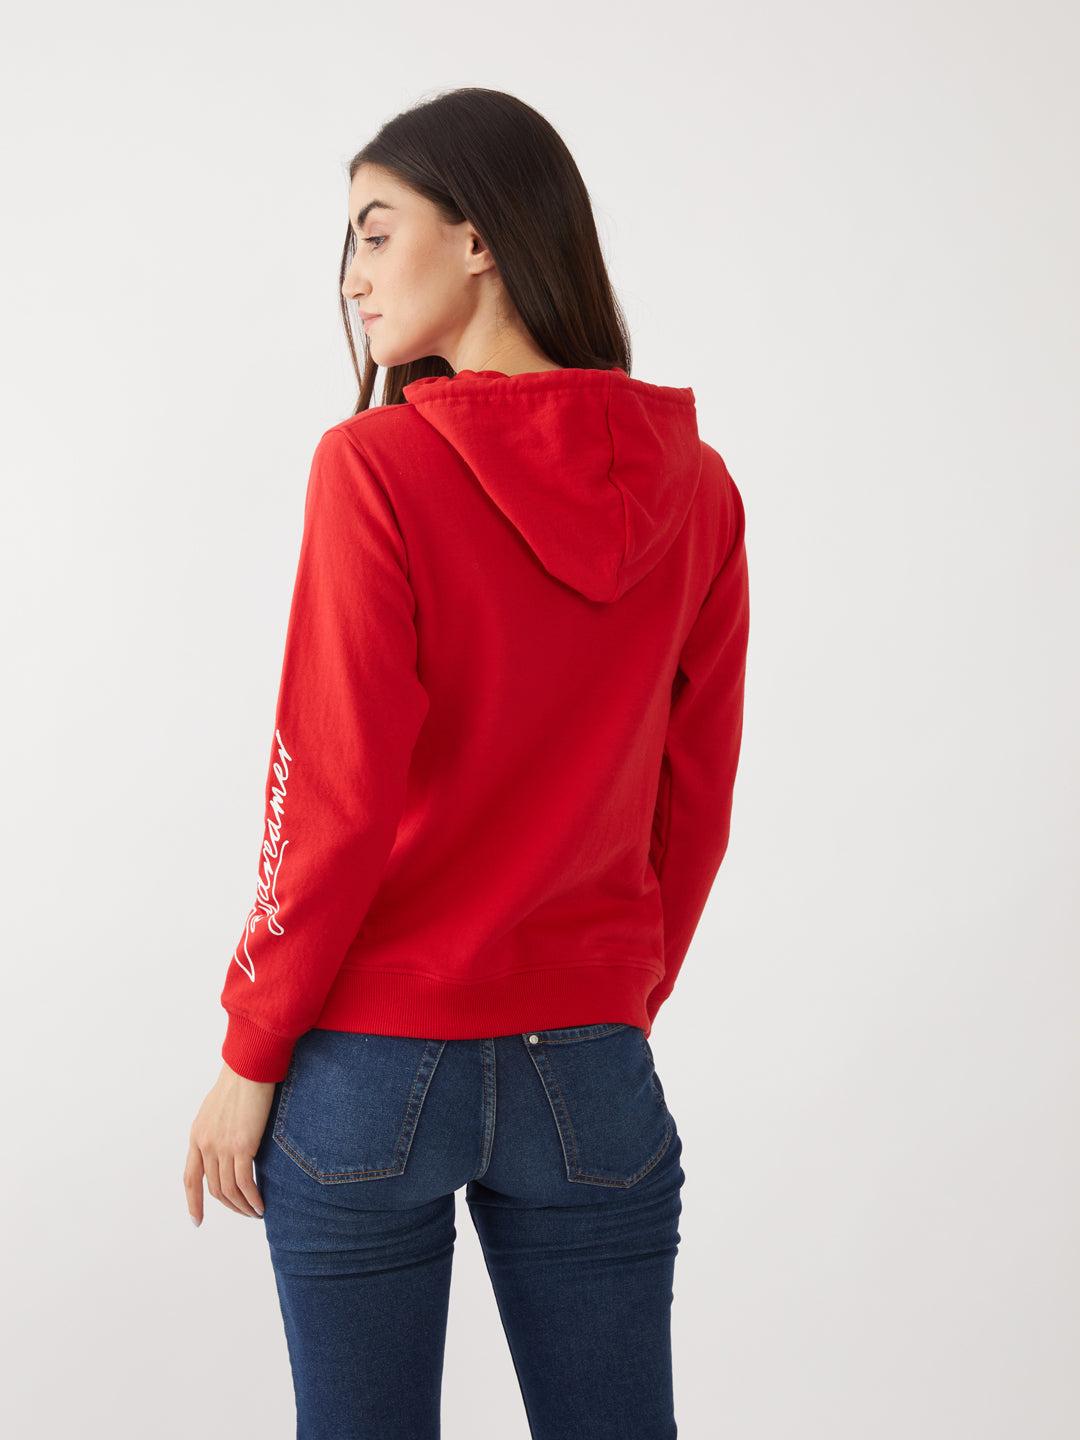 red-printed-sweatshirt-for-women